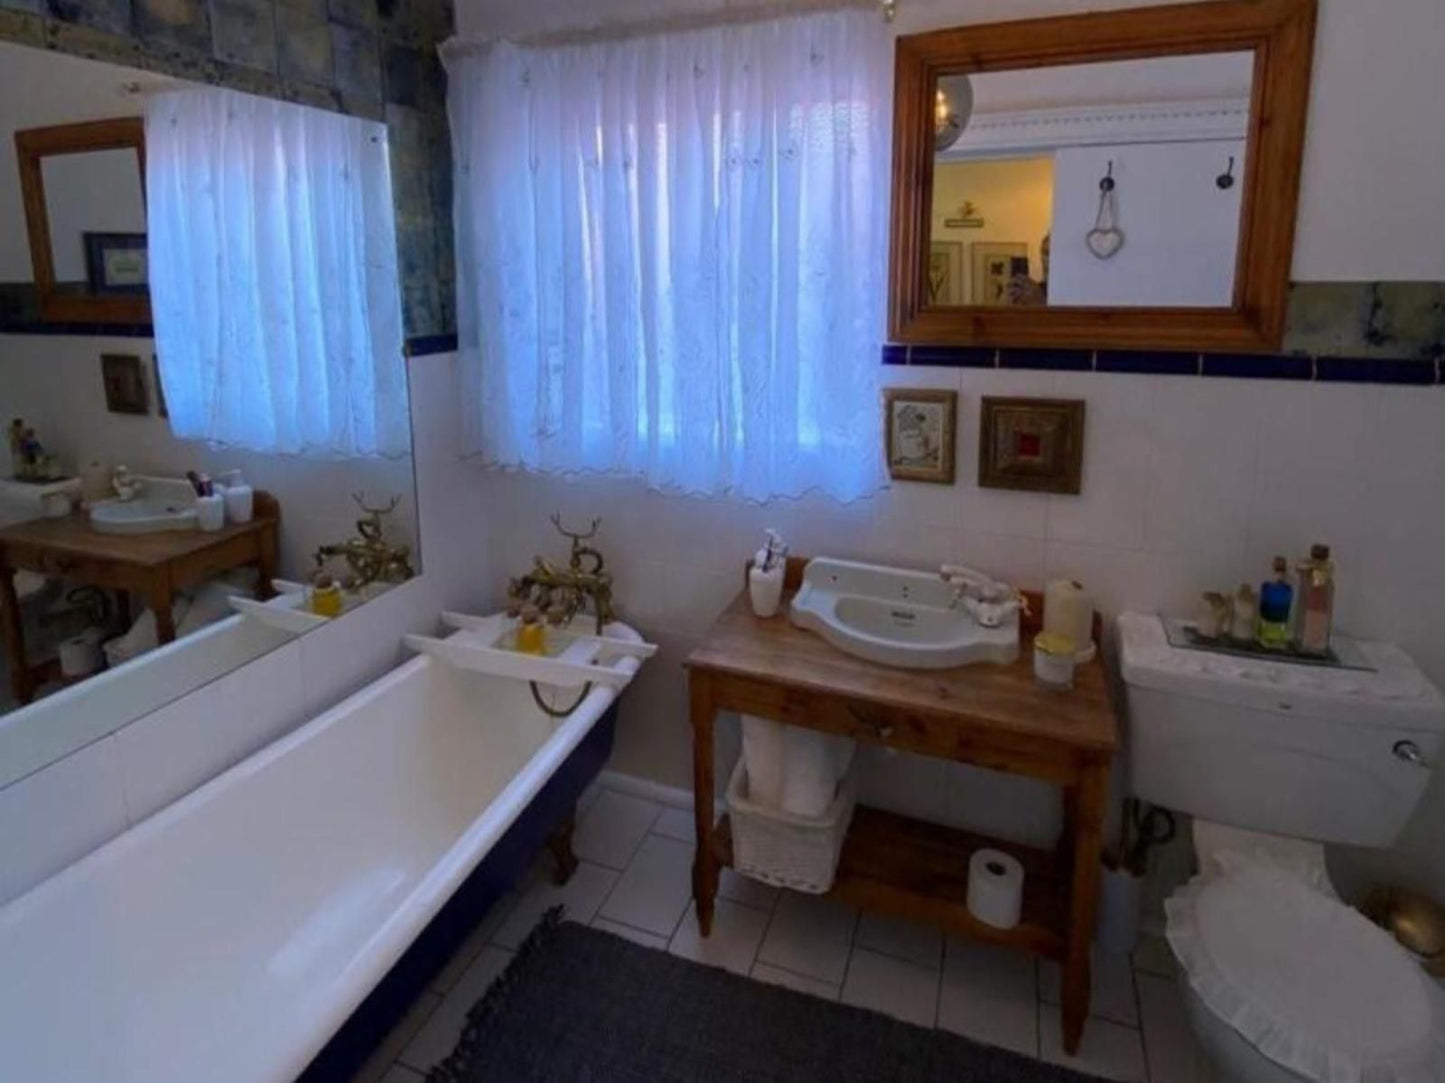 The Tuscan Garden Signal Hill Newcastle Kwazulu Natal South Africa Bathroom